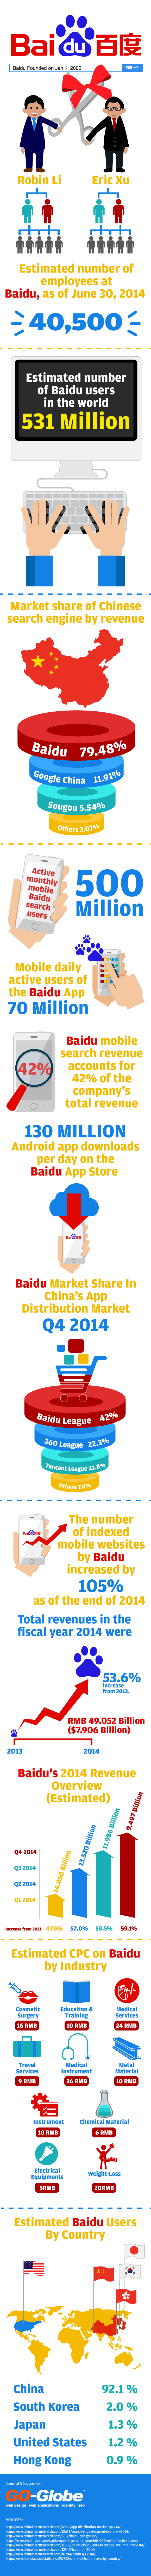 Baidu Statistics and Trends